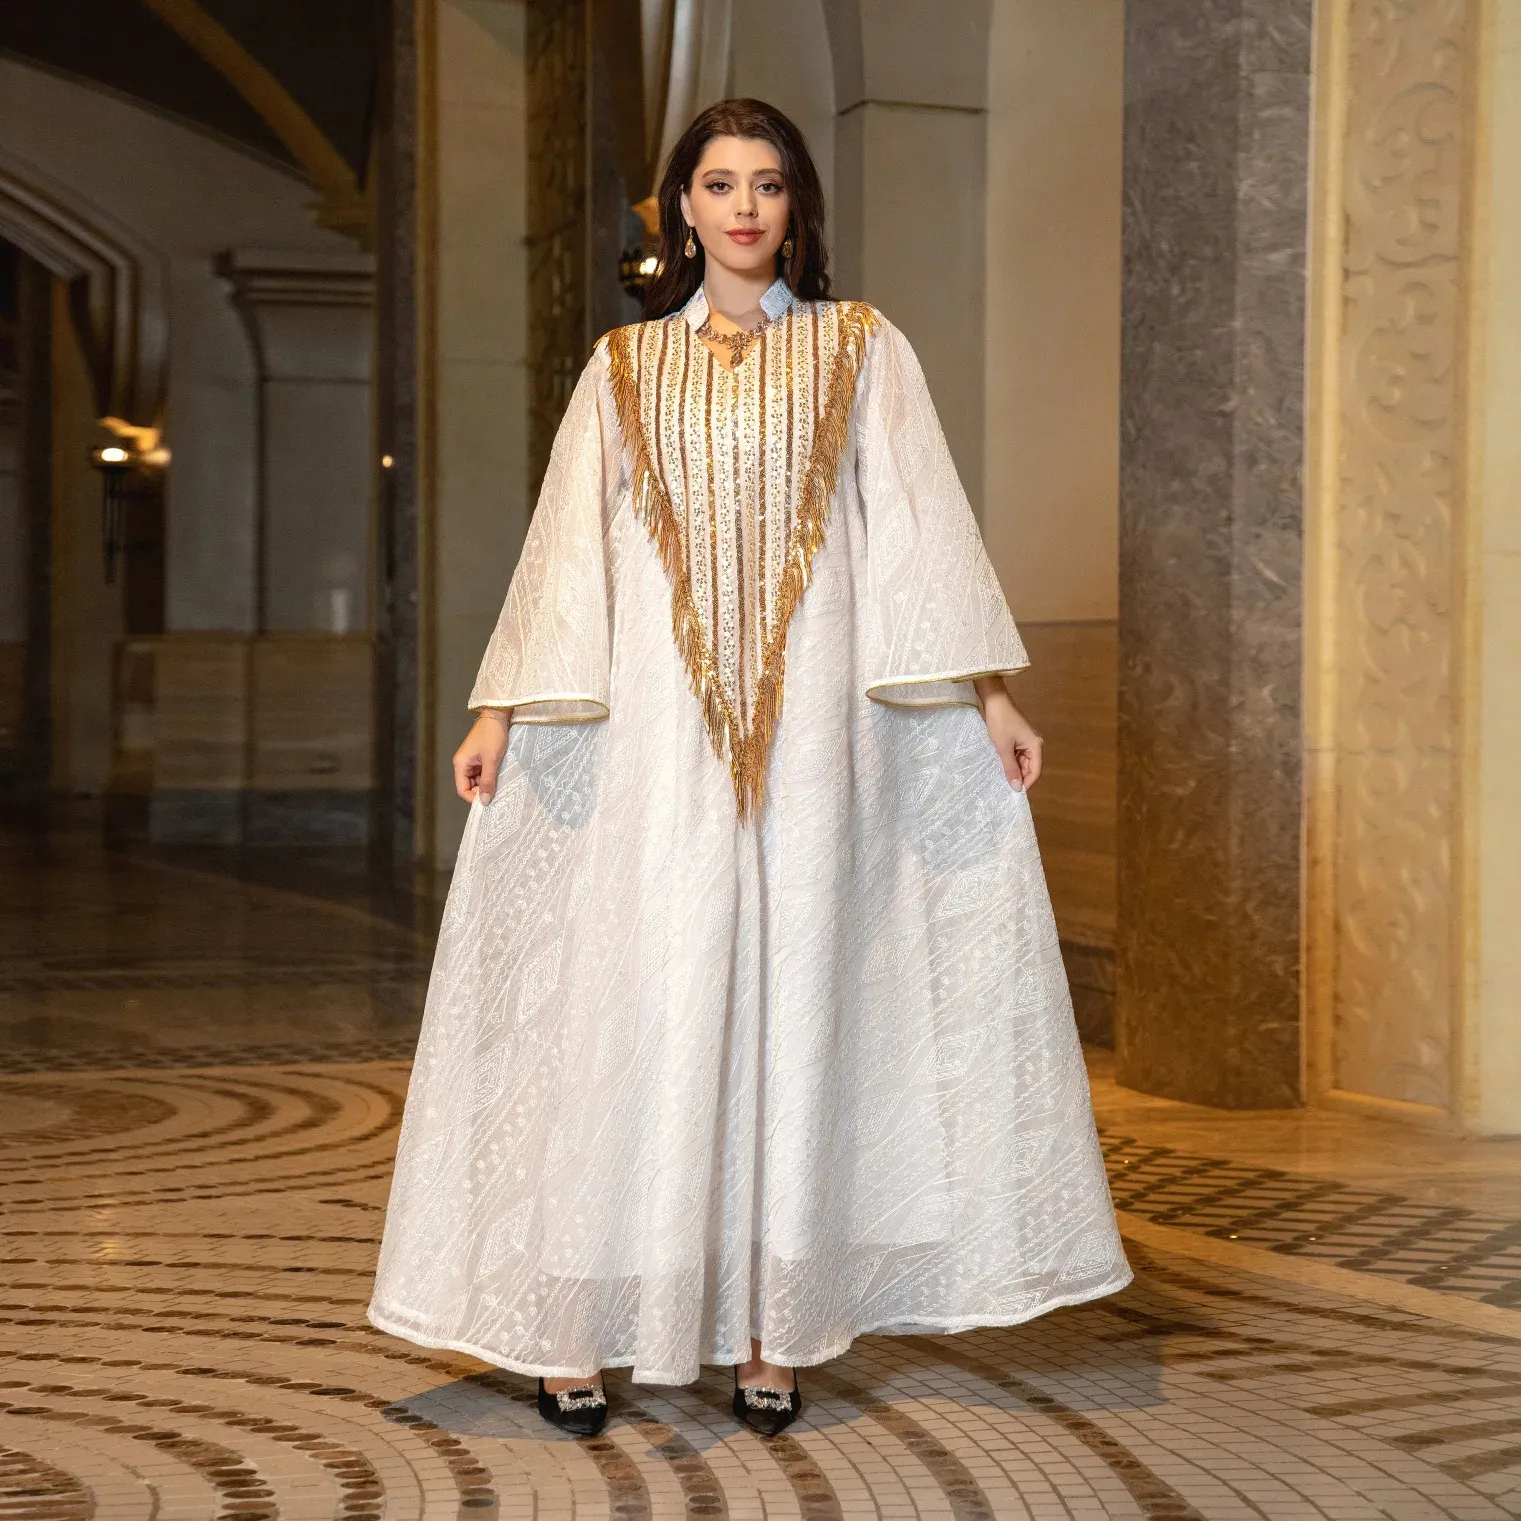 New fashion chiffon robe robe Dubai women's ethnic print elgent muslim dress for ladies beads